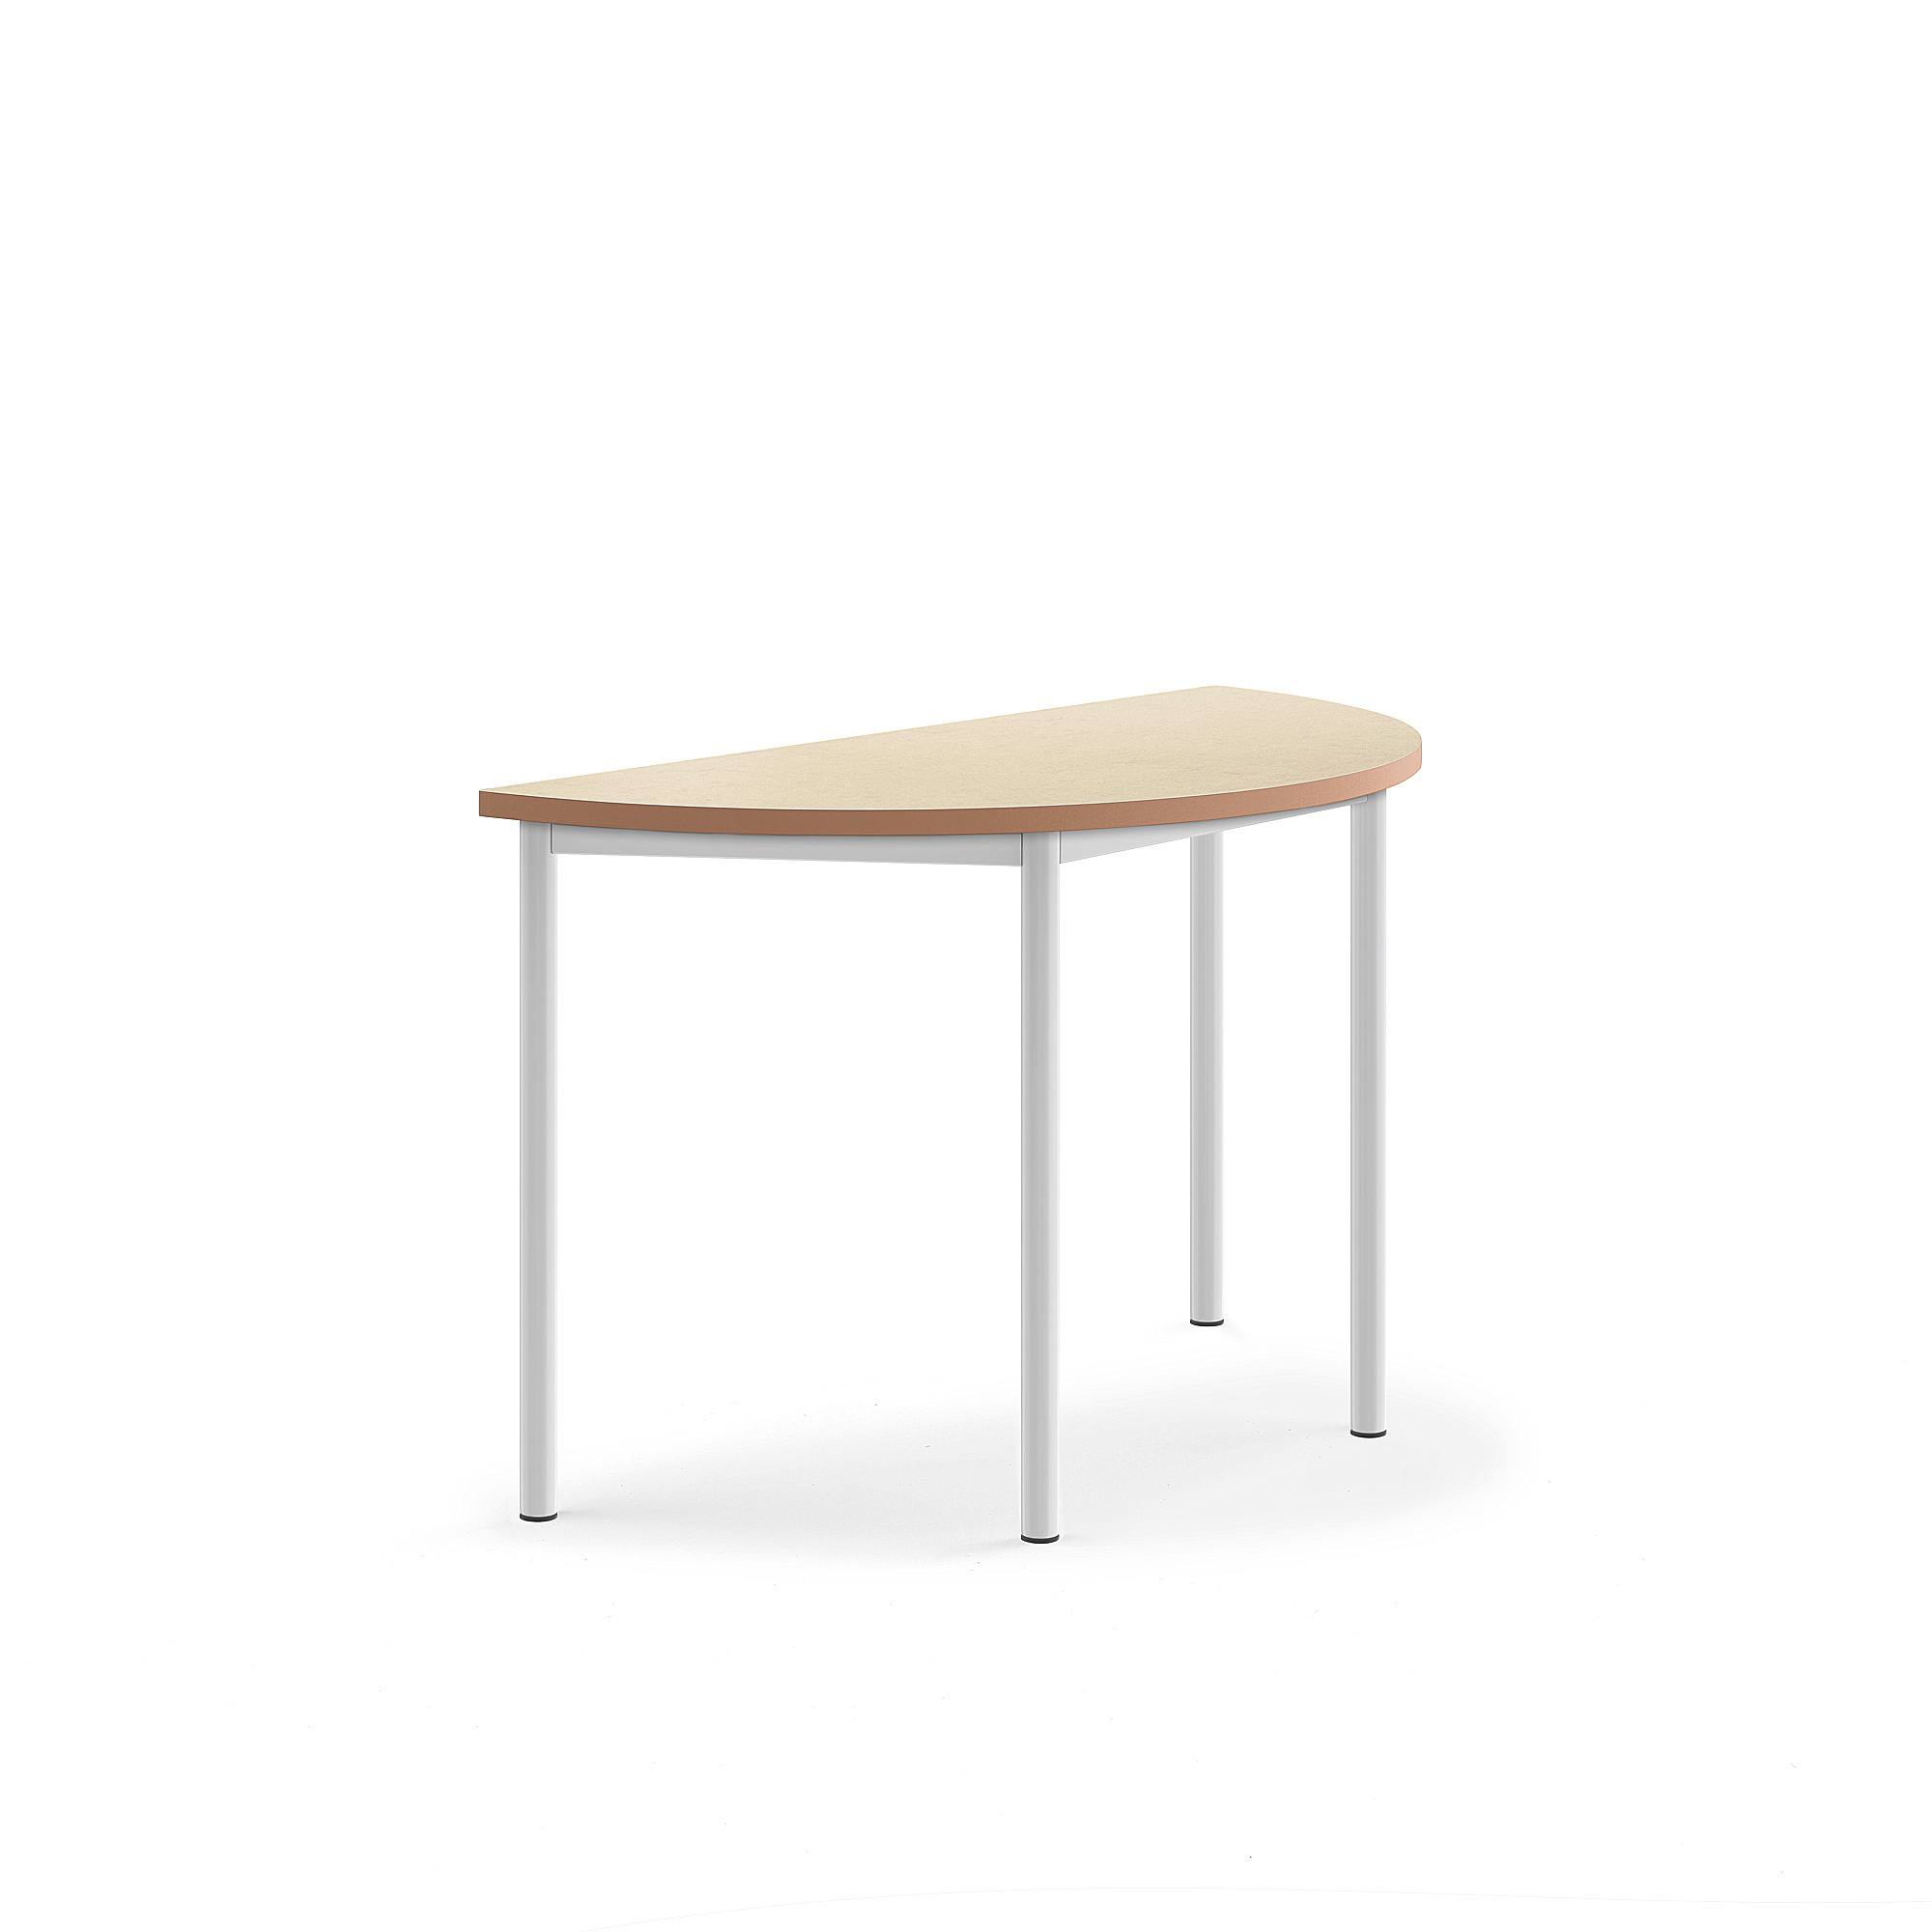 Stůl SONITUS, půlkruh, 1200x600x720 mm, bílé nohy, deska s linoleem, béžová